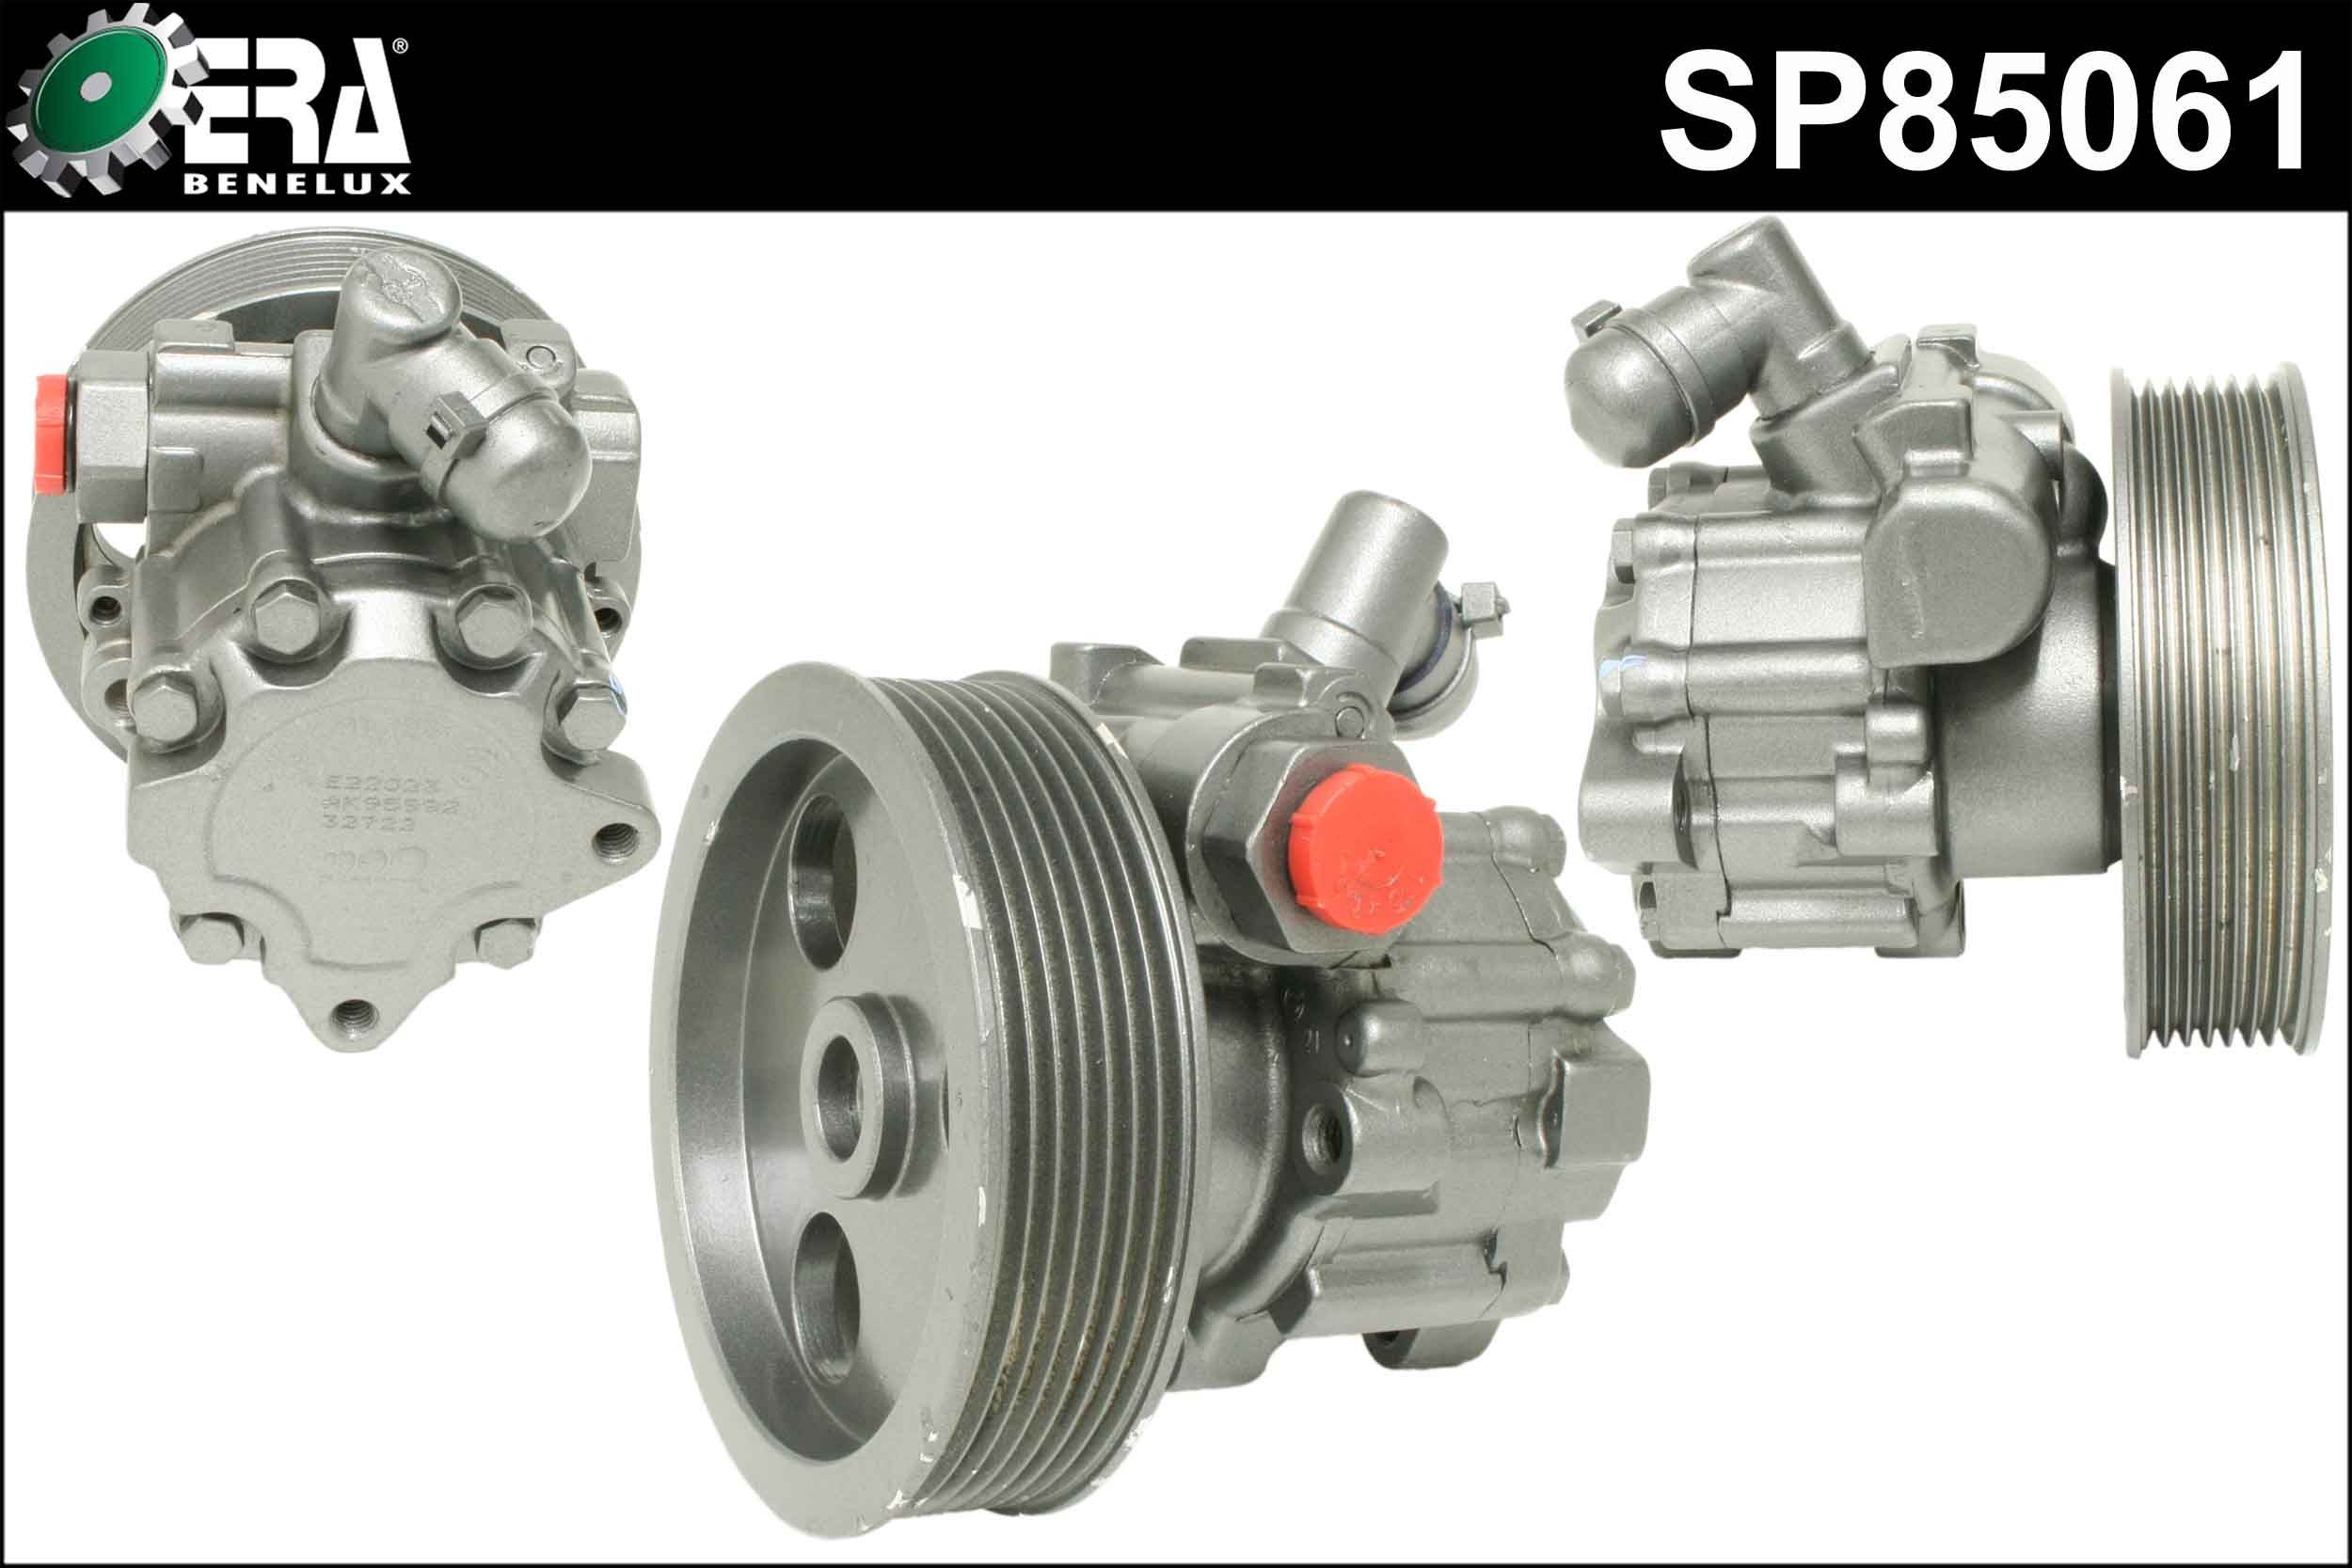 ERA Benelux SP85061 Power steering pump A 004 466 8201